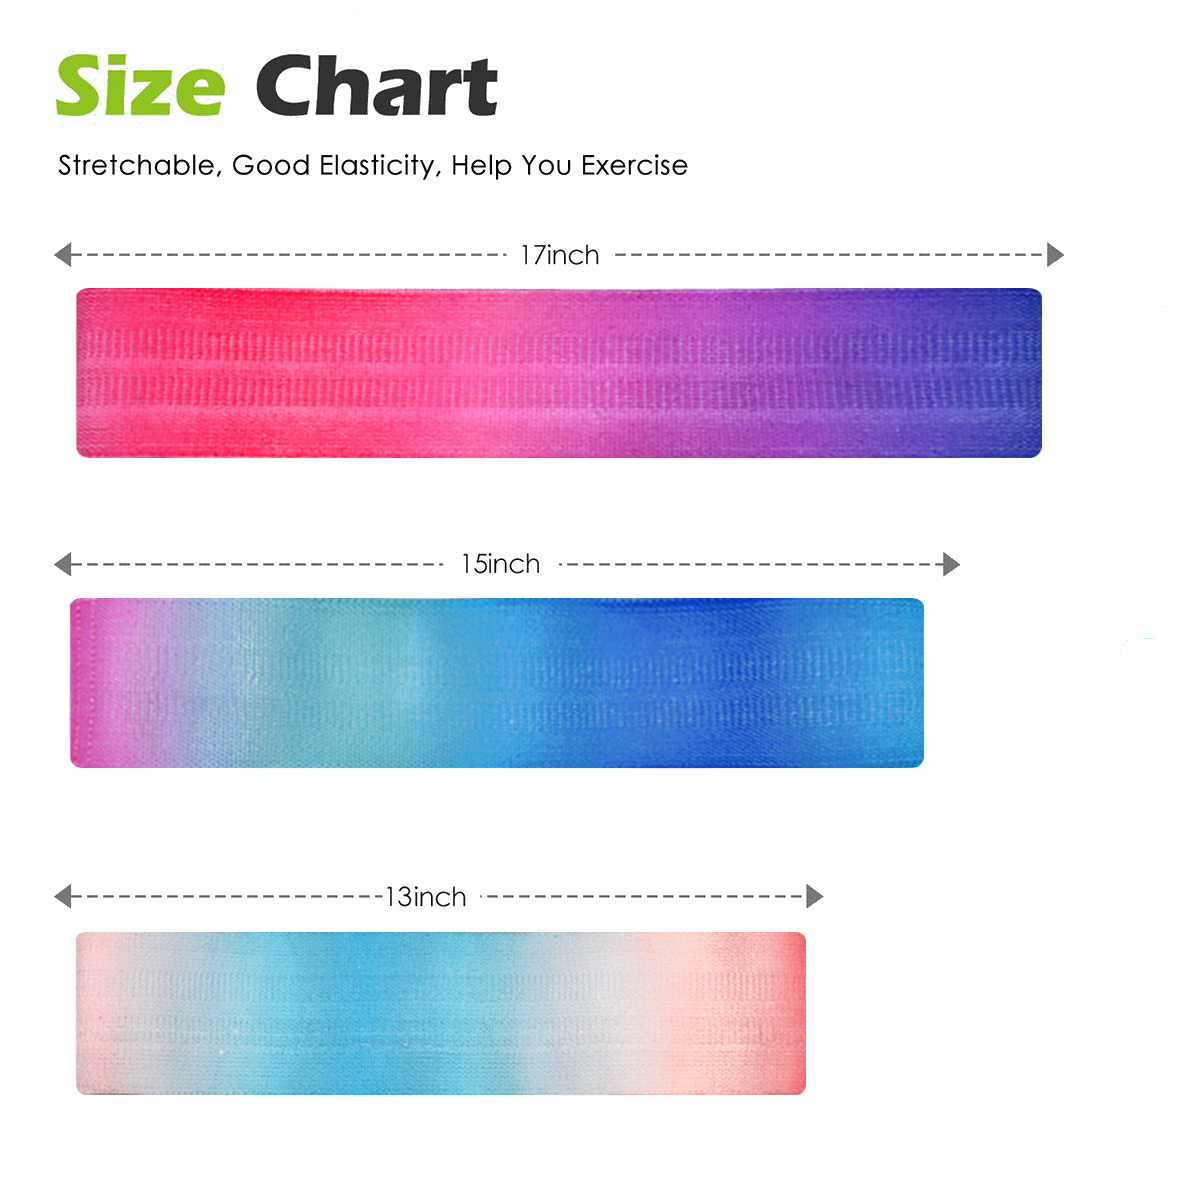 Hip Circle Size Chart